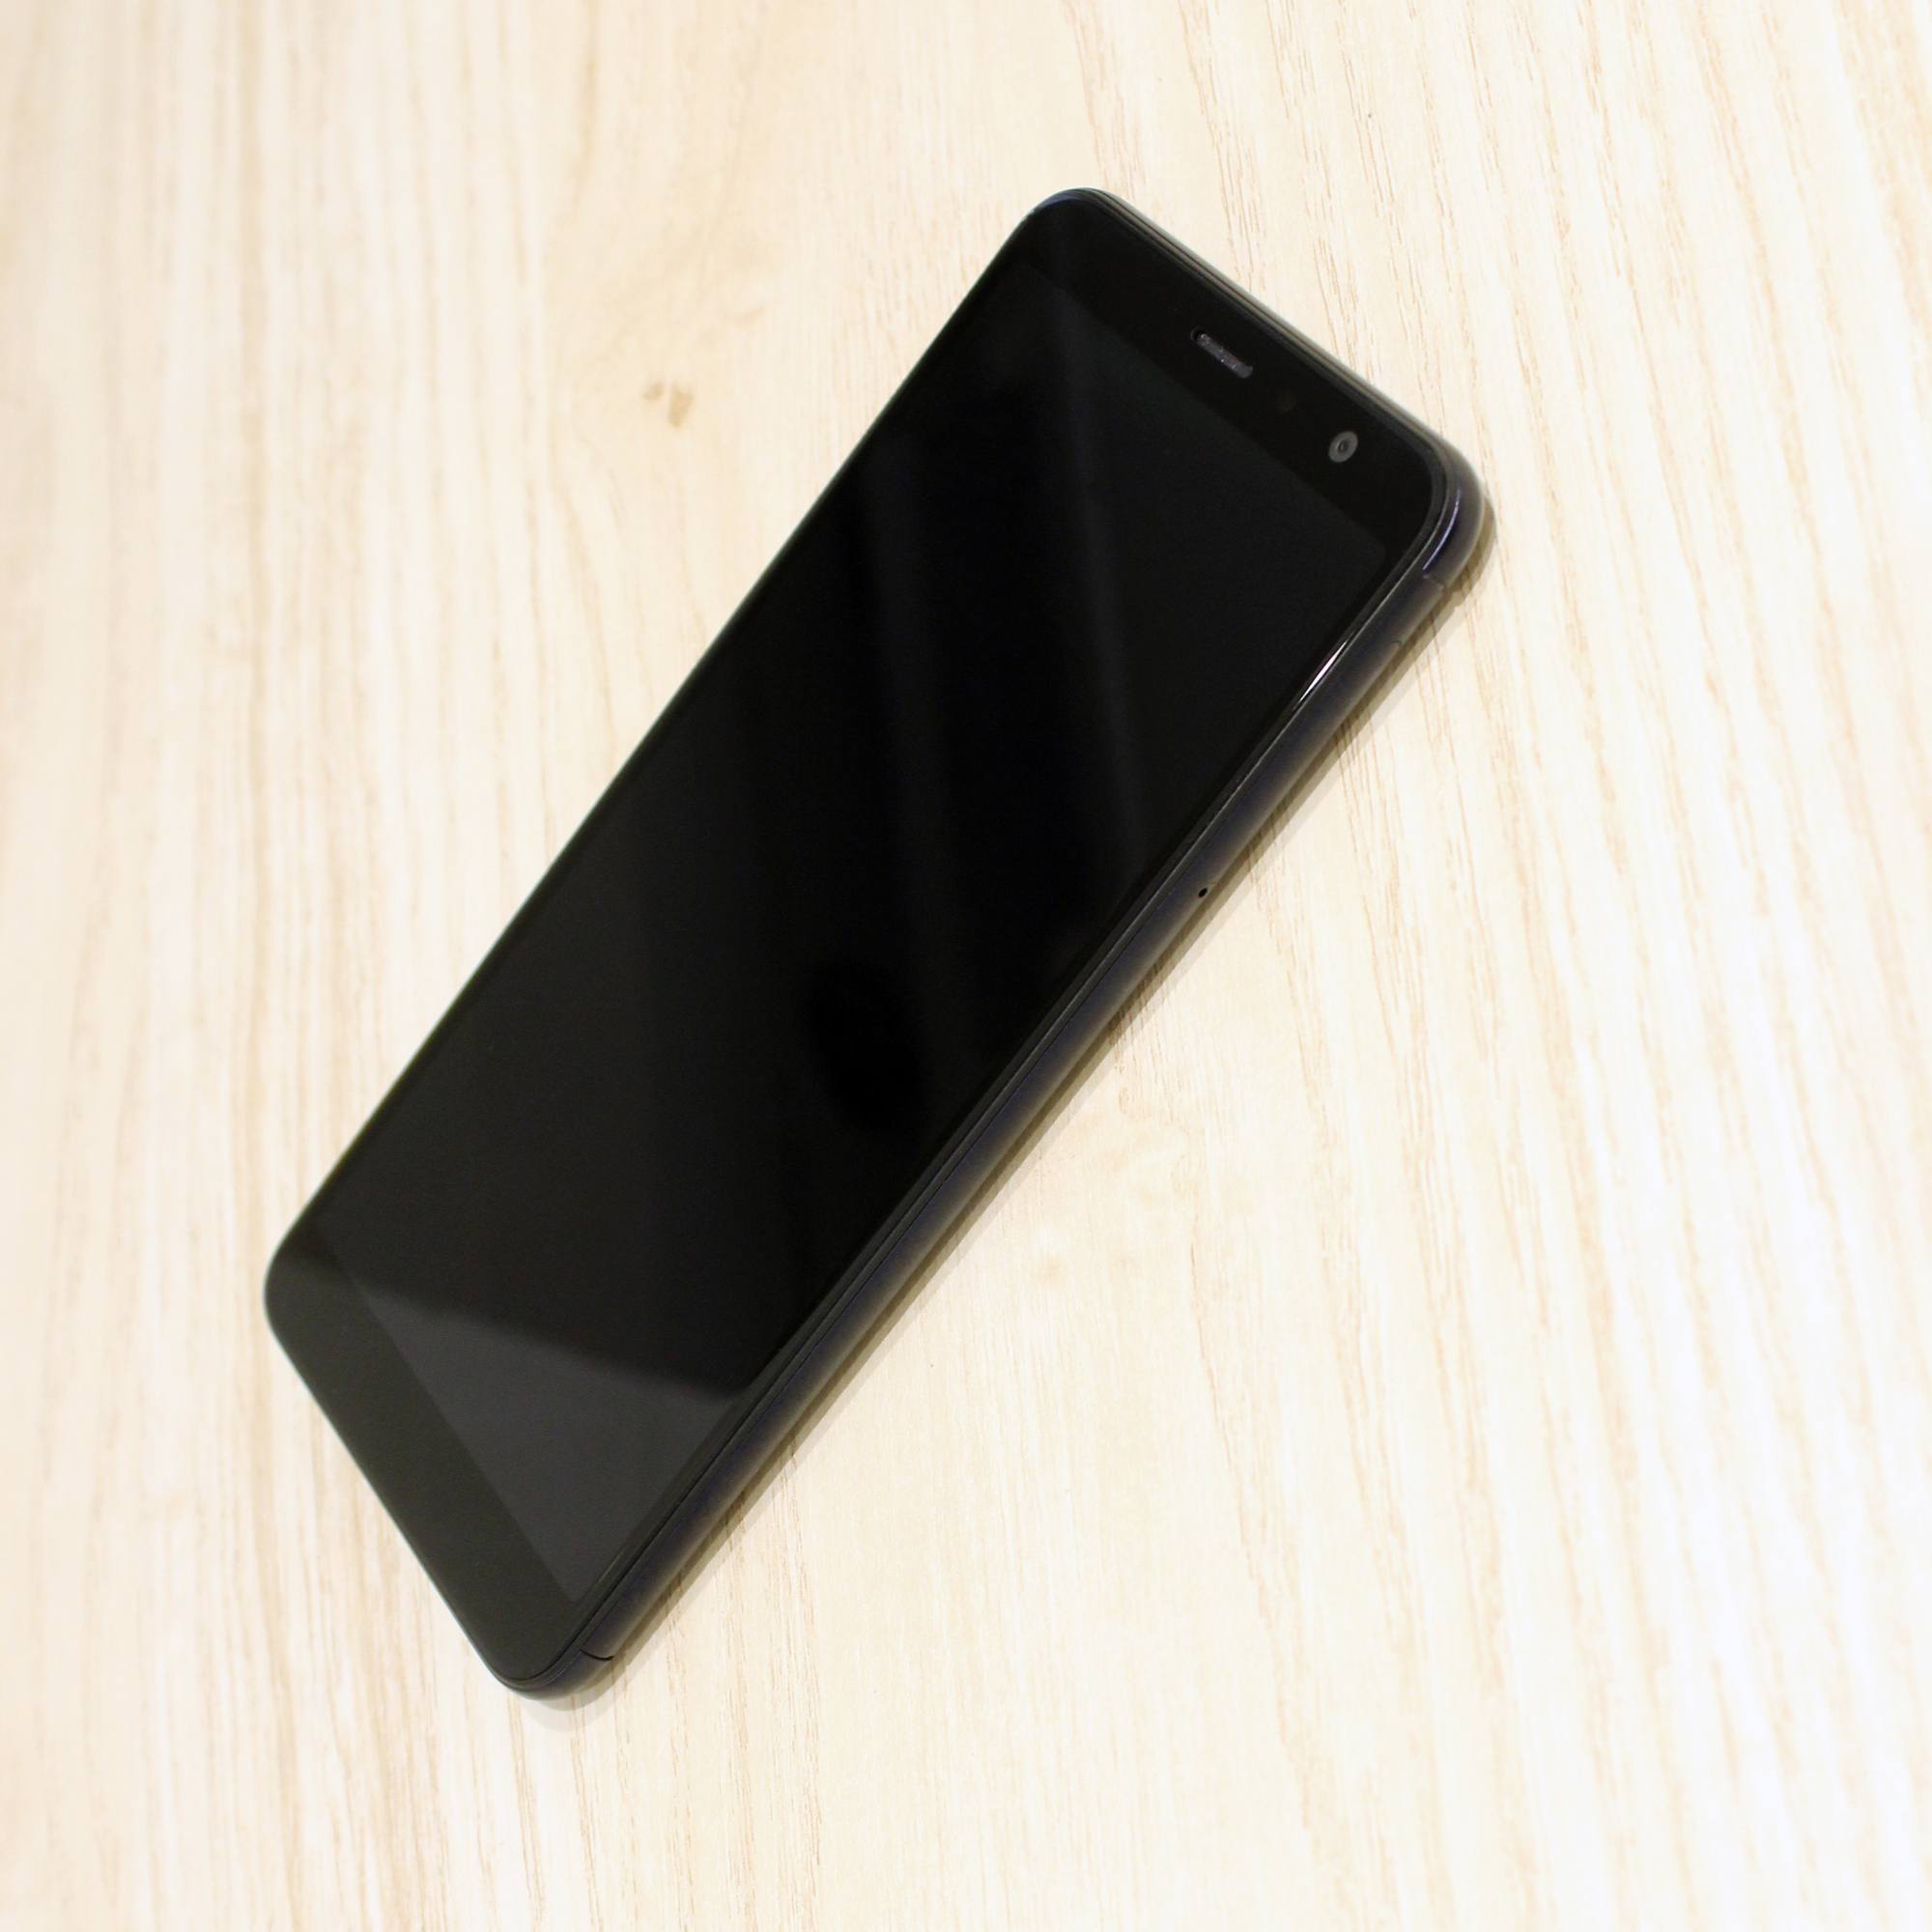 Asus IMG 1444 TEST – Asus Zenfone Max Plus M1 : Un smartphone qui reprend les bases de la marque asus